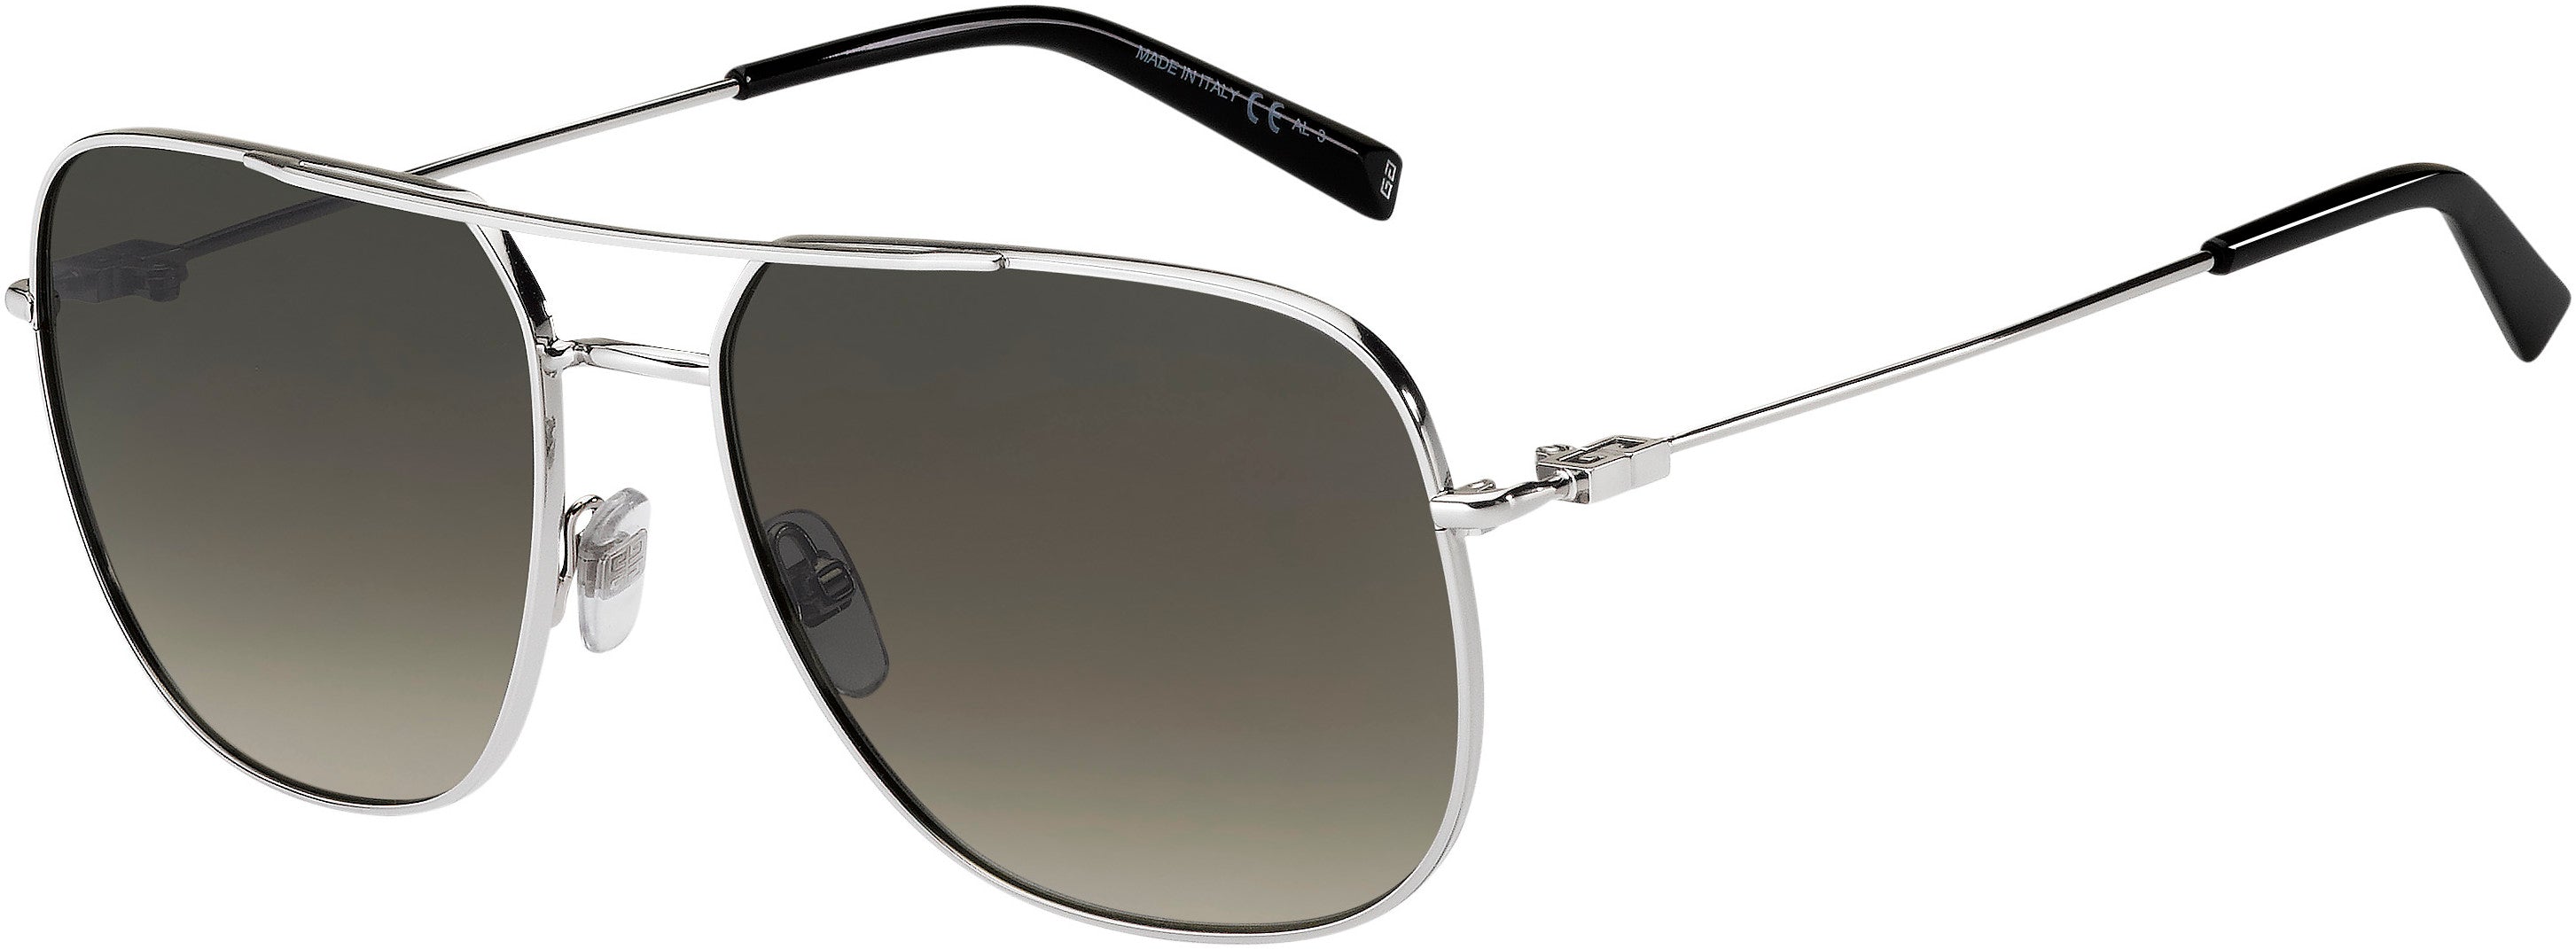  Givenchy 7195/S Aviator Sunglasses 0010-0010  Palladium (HA Brown Gradient)